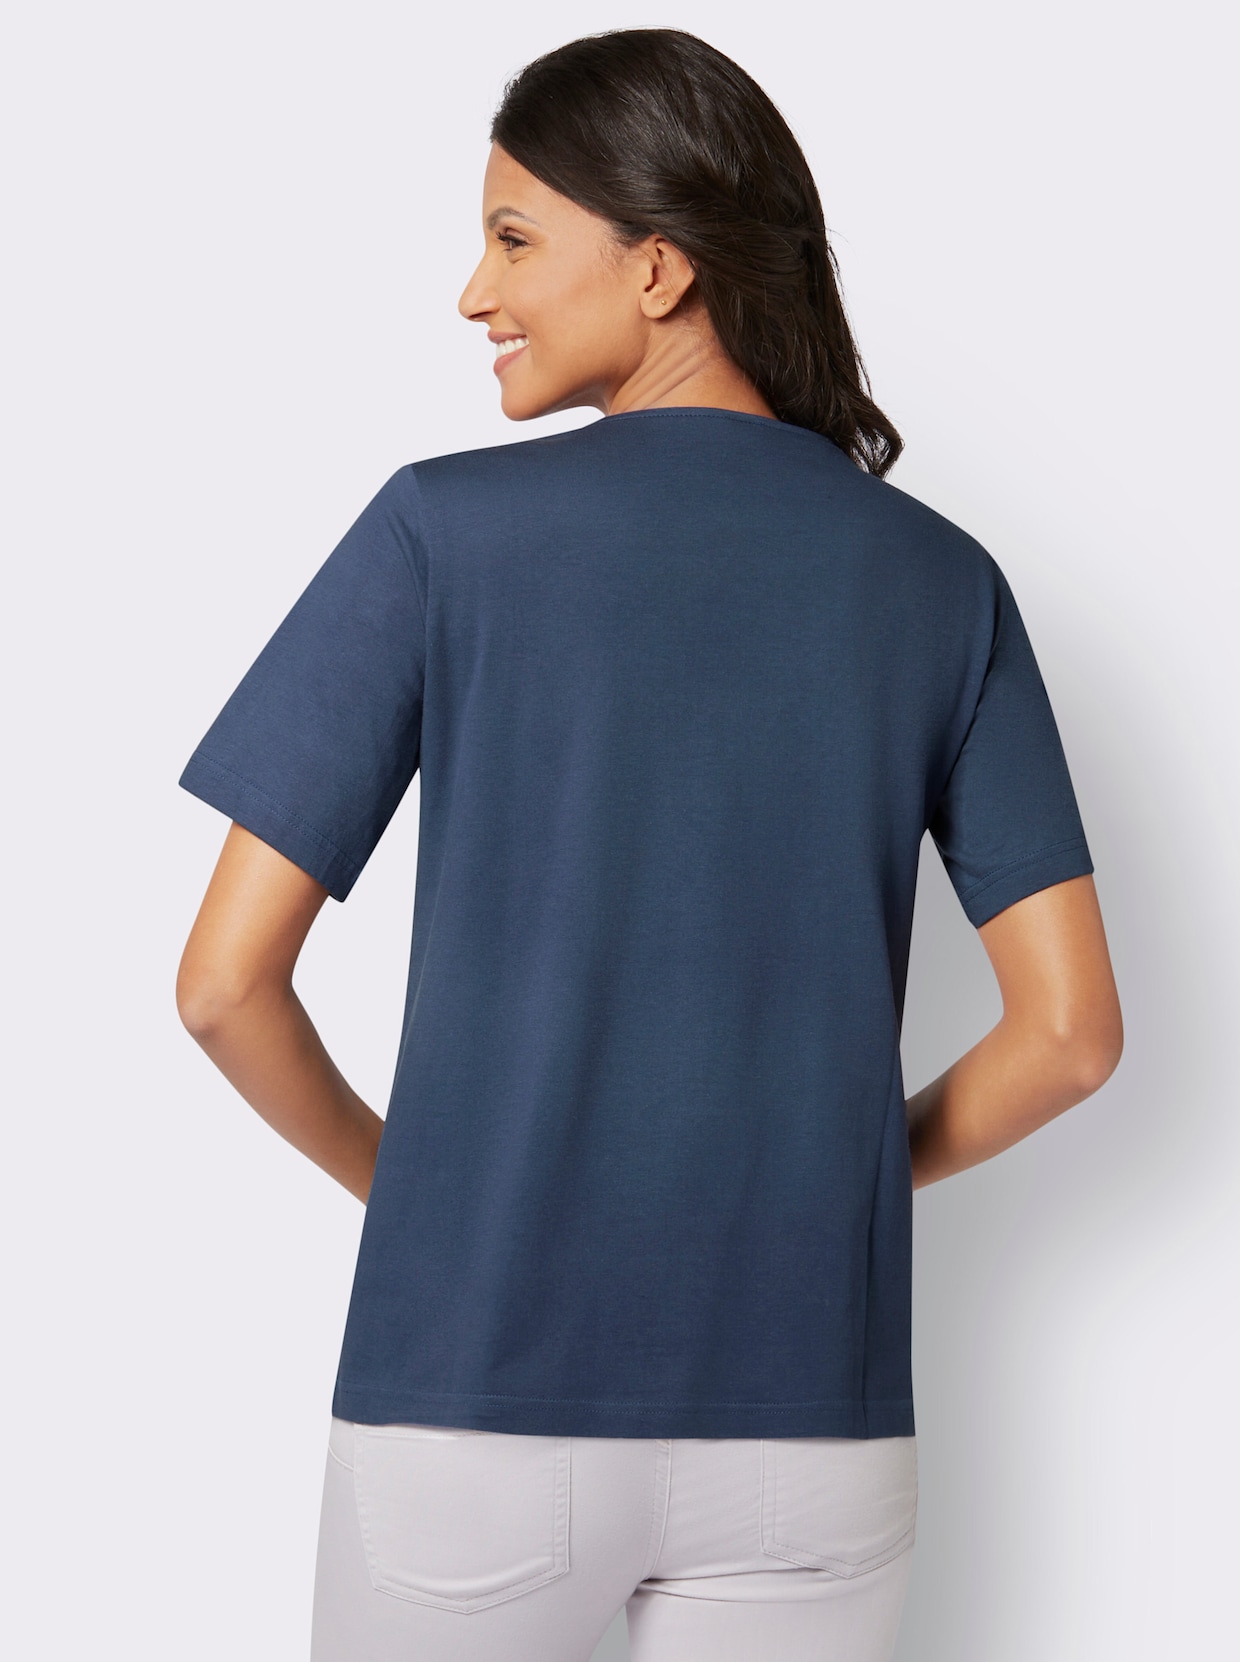 Kurzarm-Shirt - dunkelblau